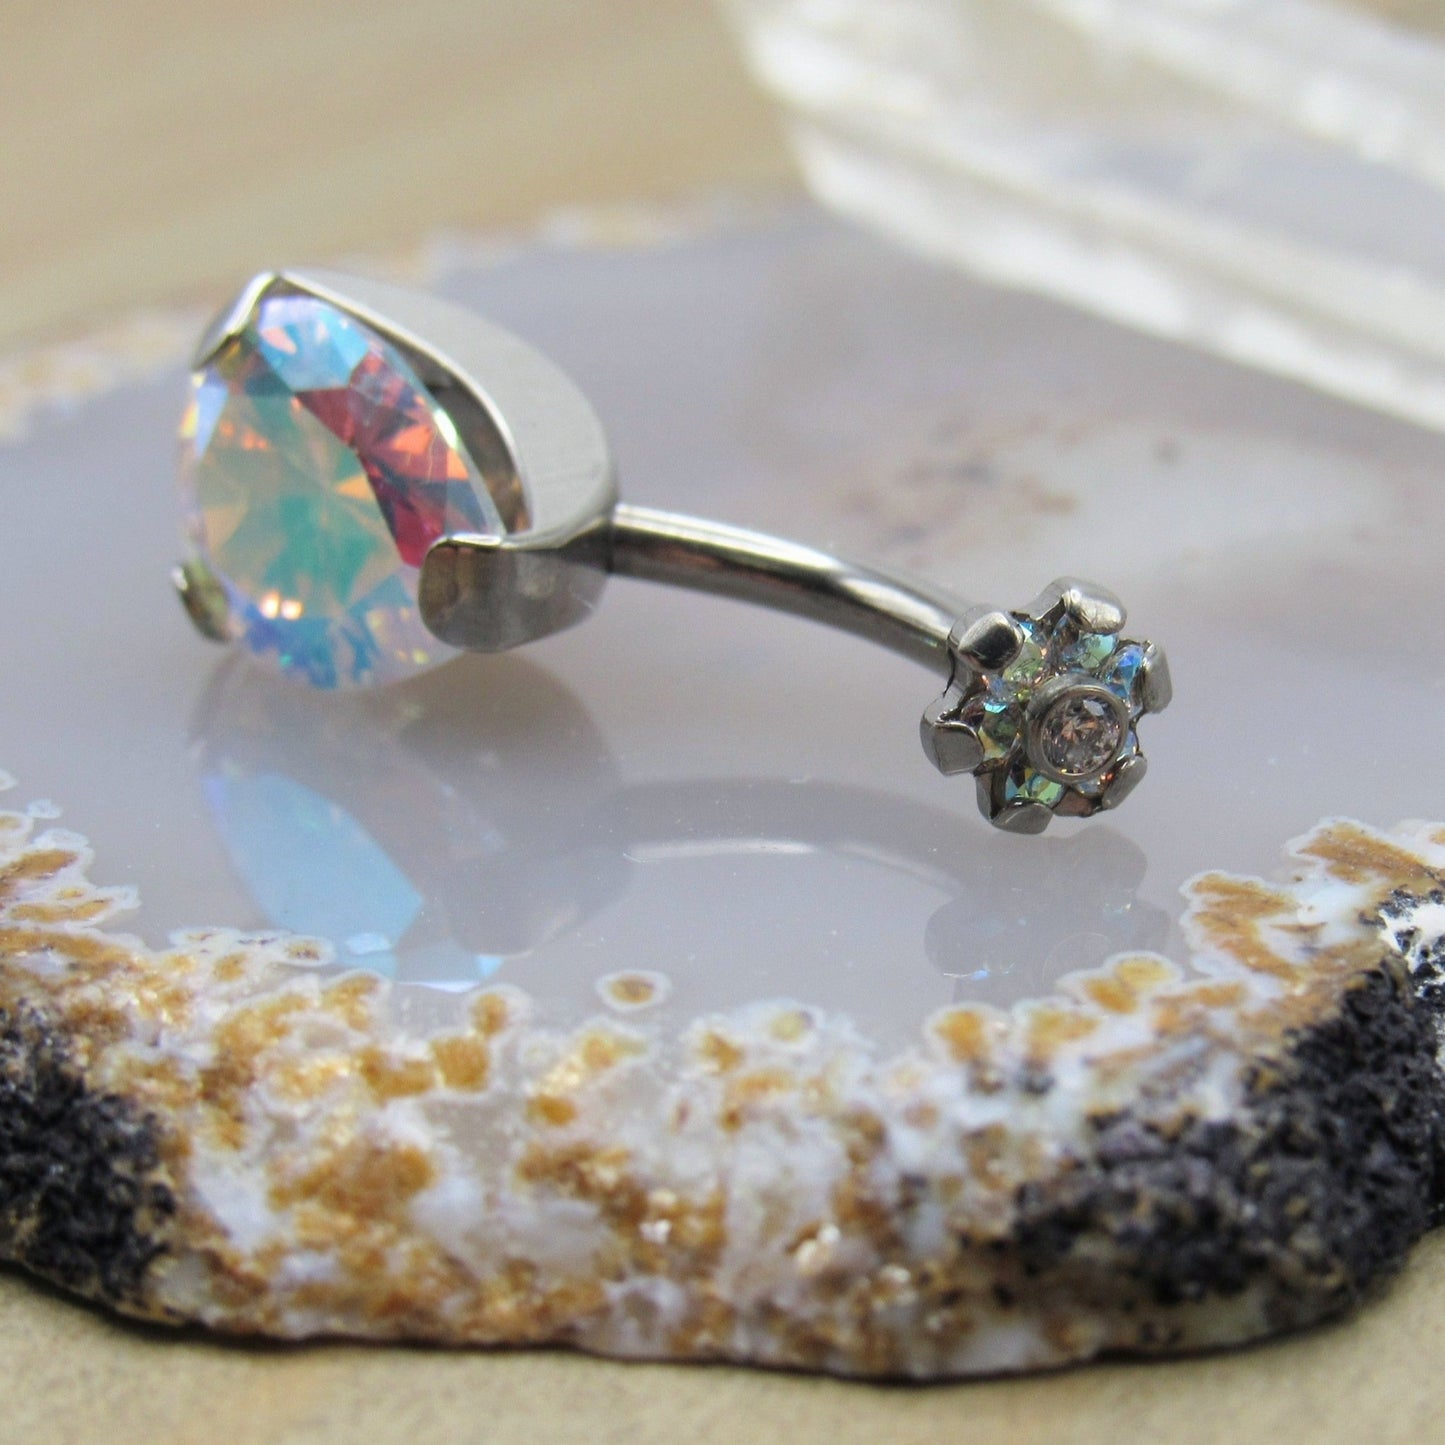 Titanium belly button piercing ring 14g 3/8" double aurora borealis gemstone navel curve - Siren Body Jewelry